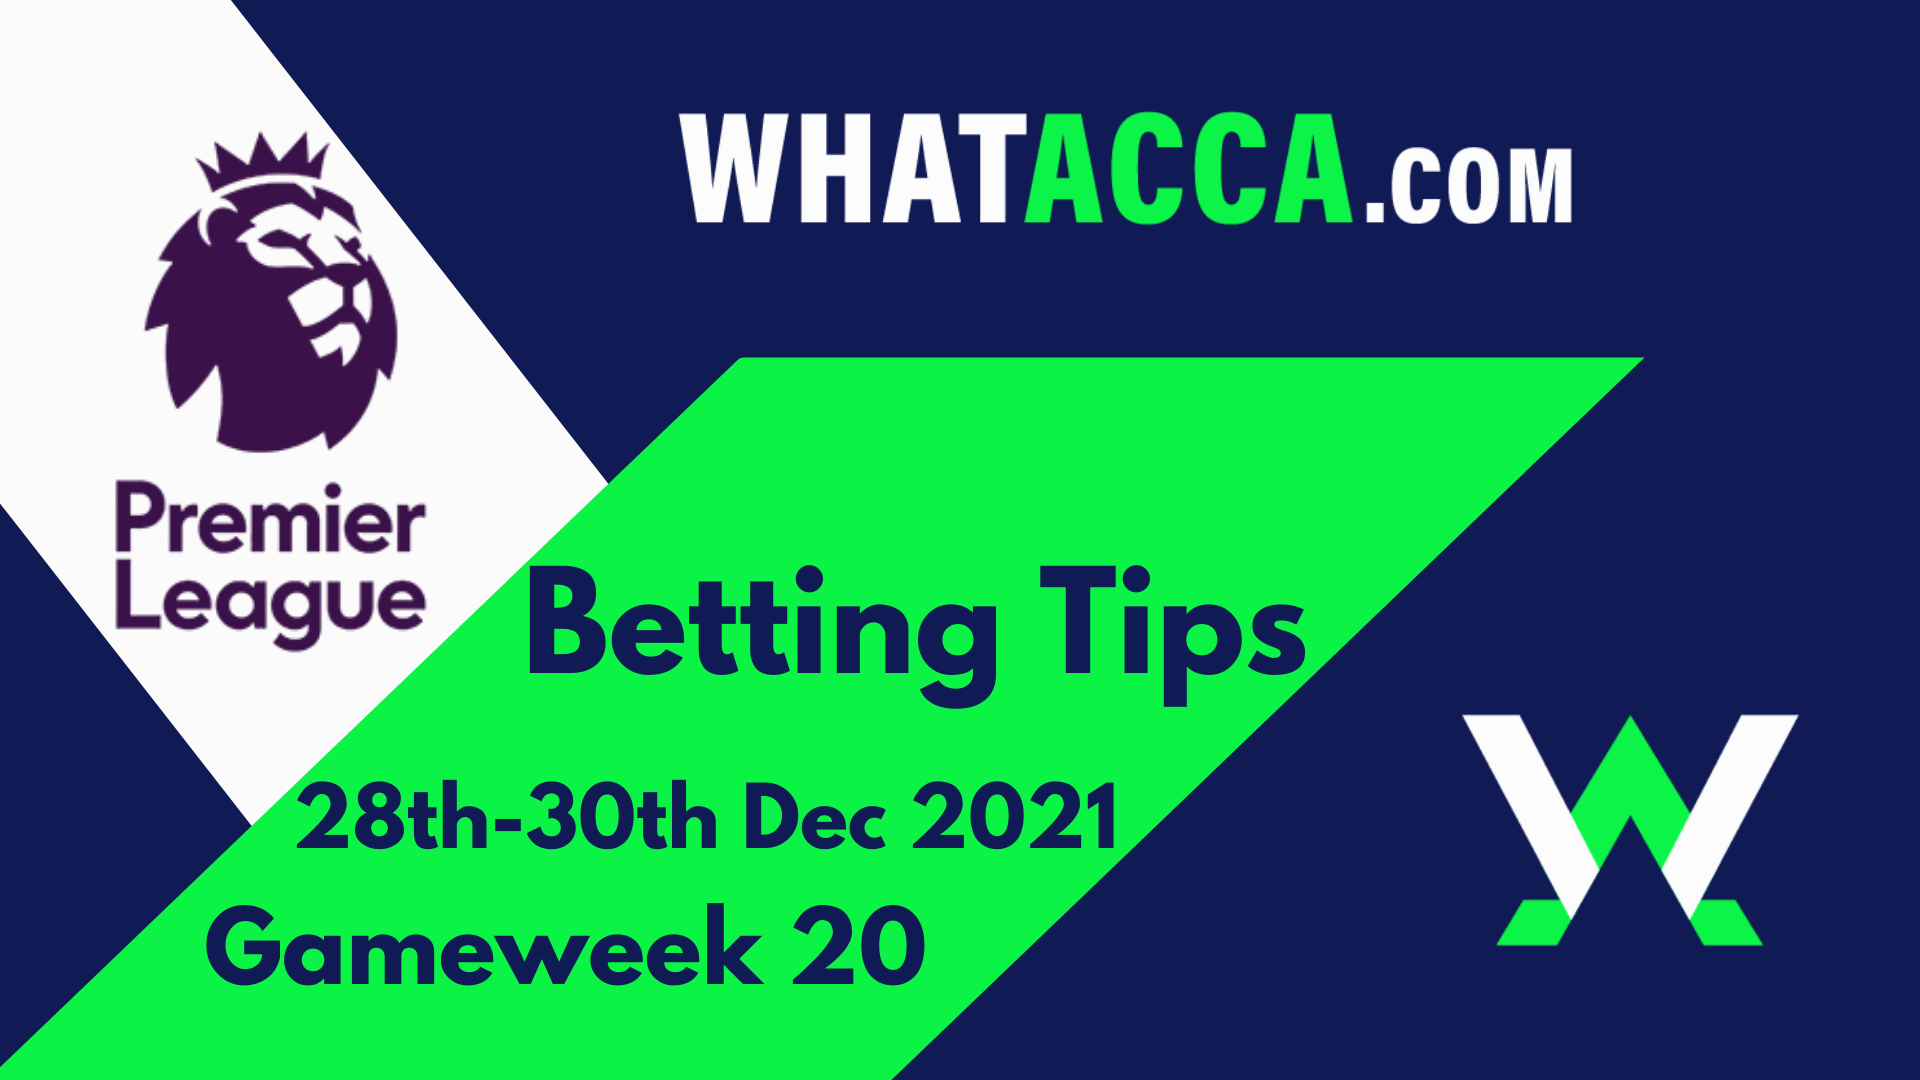 premier league betting tips gameweek 20